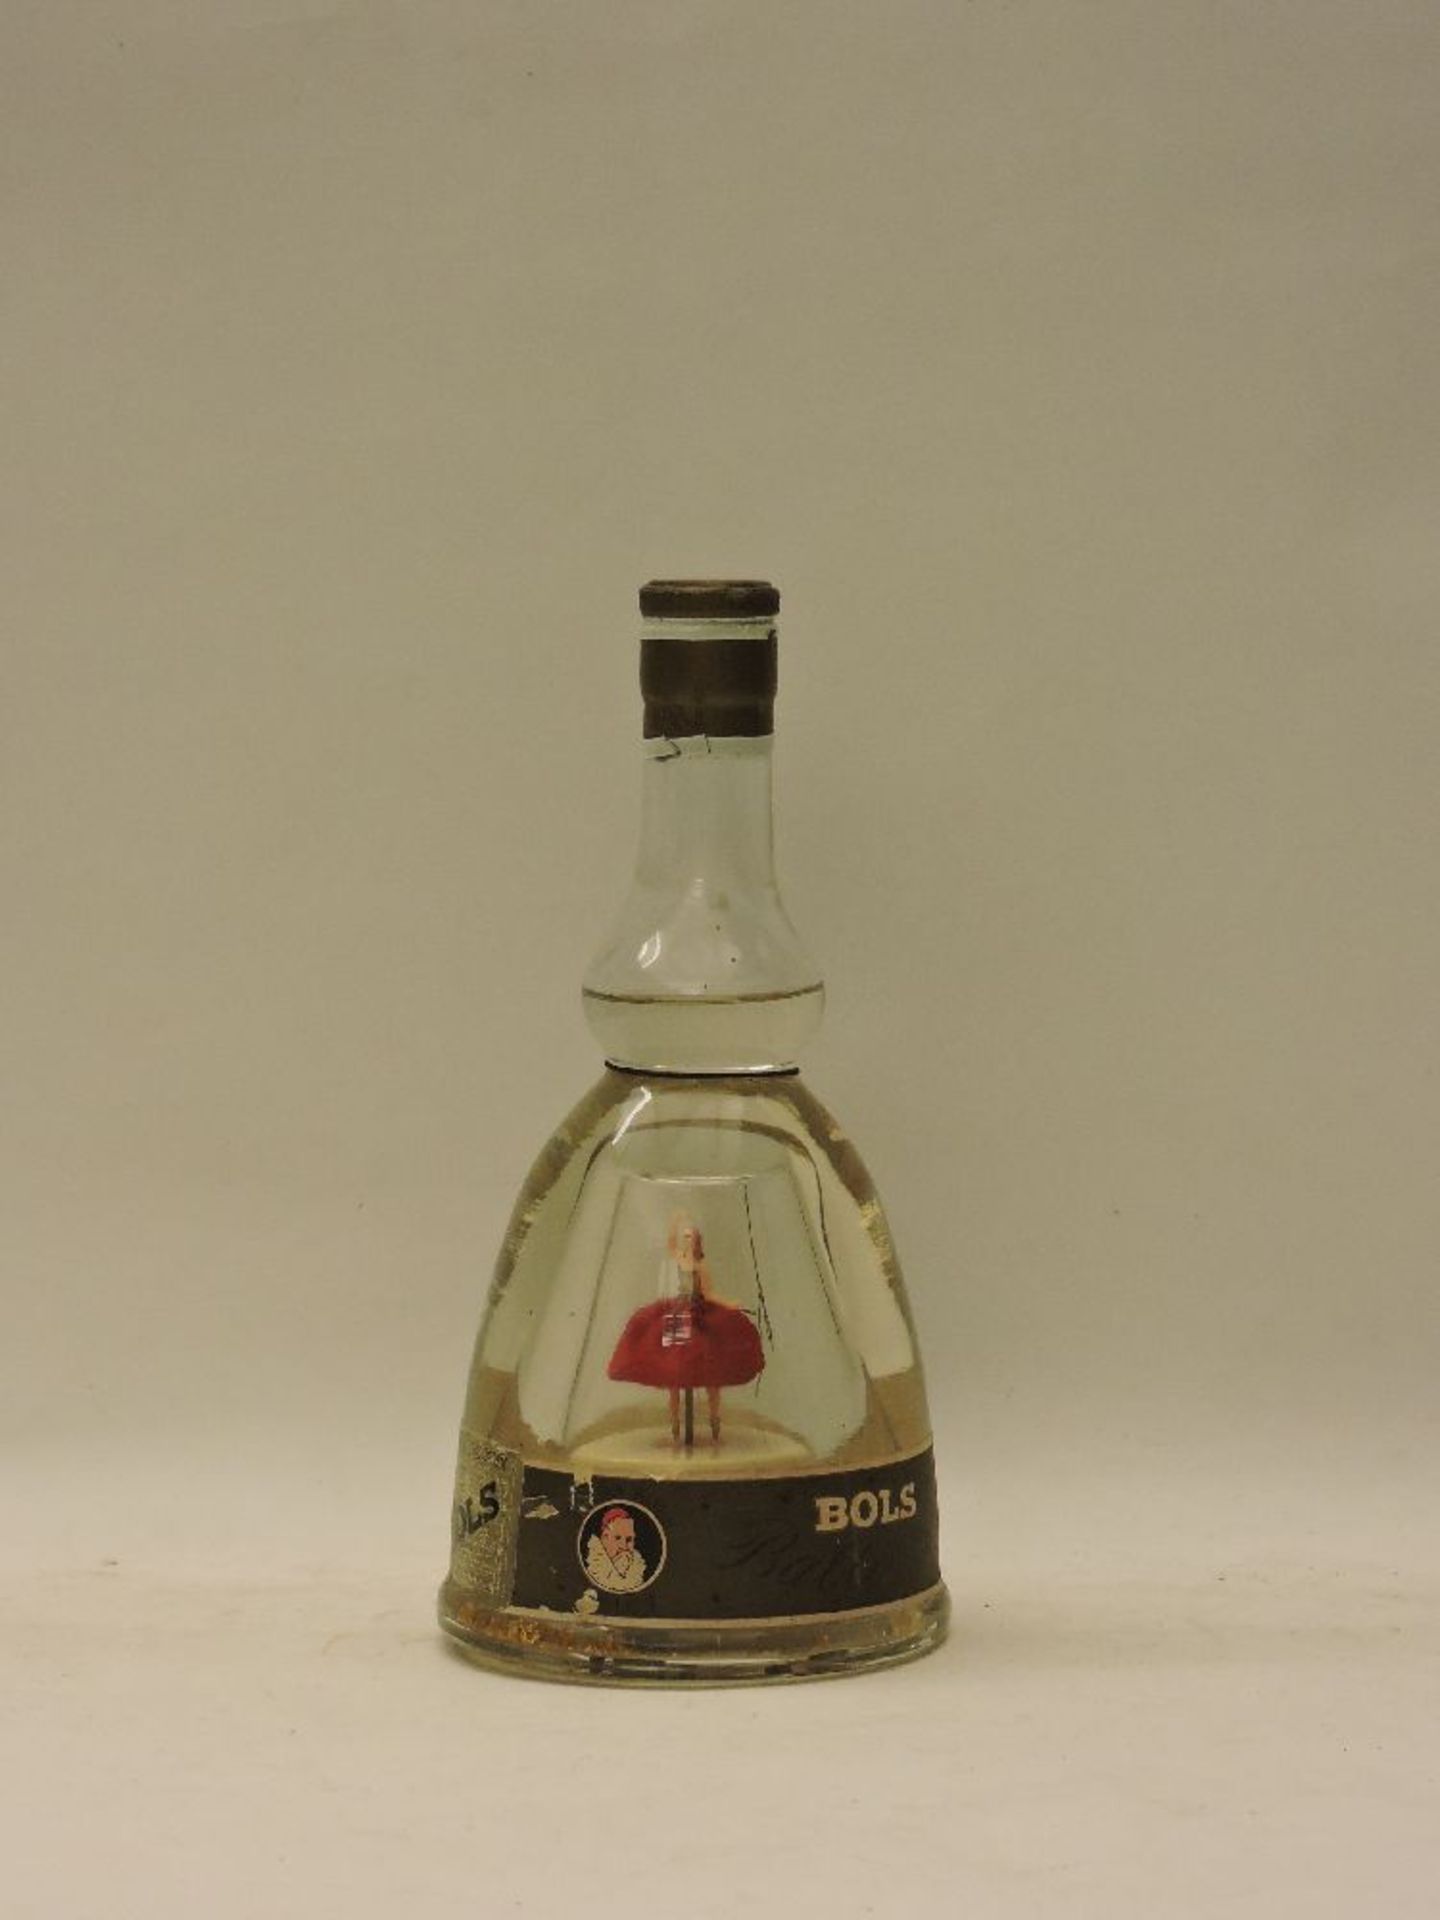 A Bols Ballerina musical bottle, containing Bols Gold Liqueur